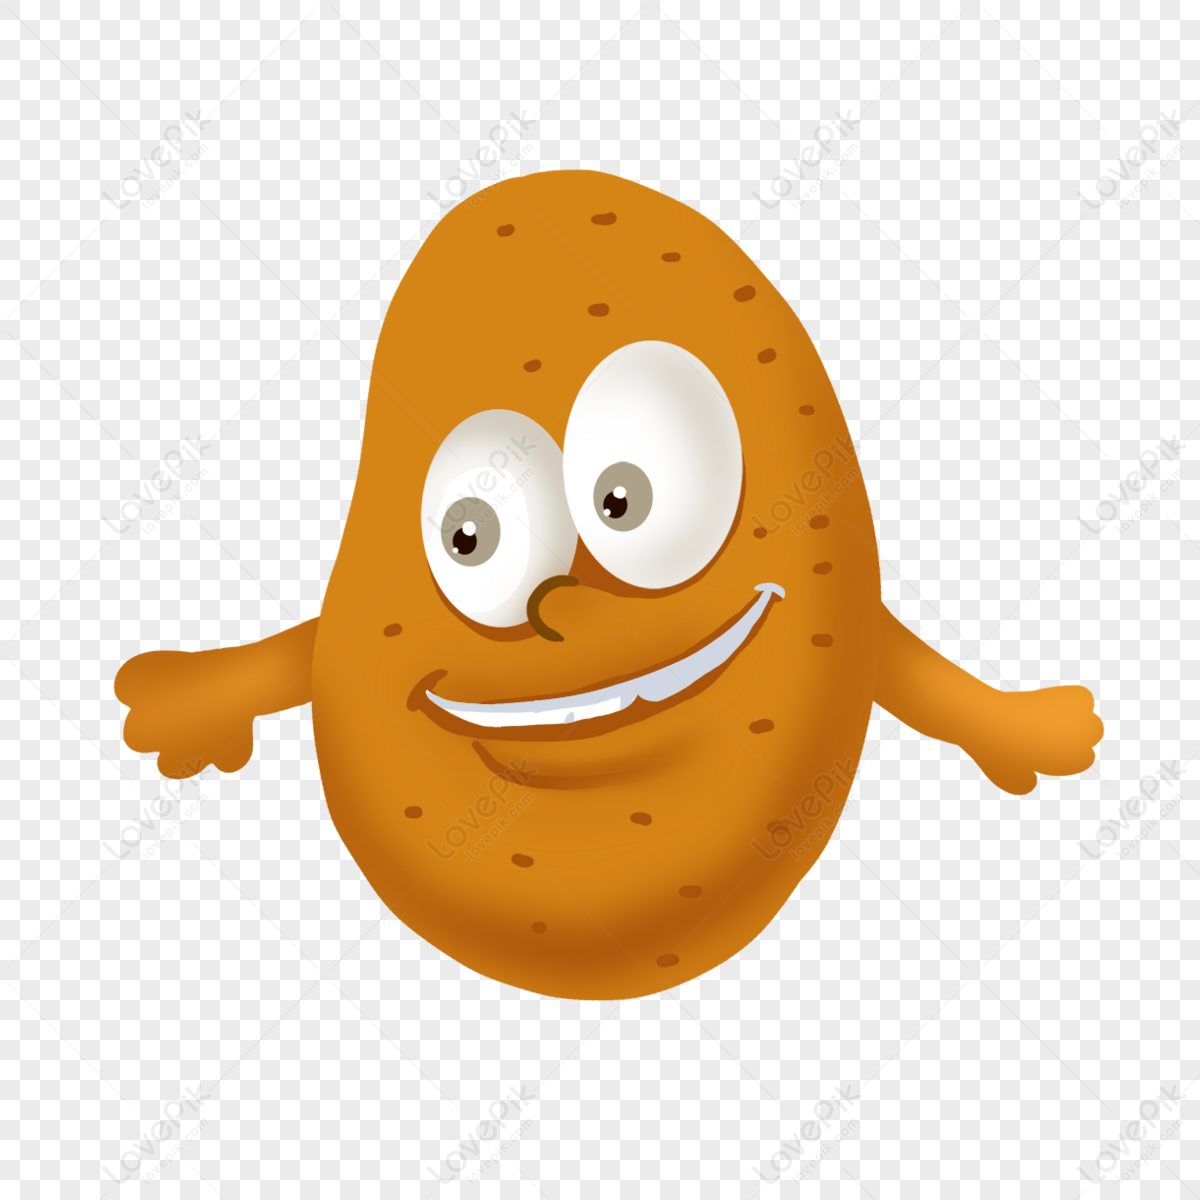 Cute Potatoes PNG Transparent Images Free Download, Vector Files